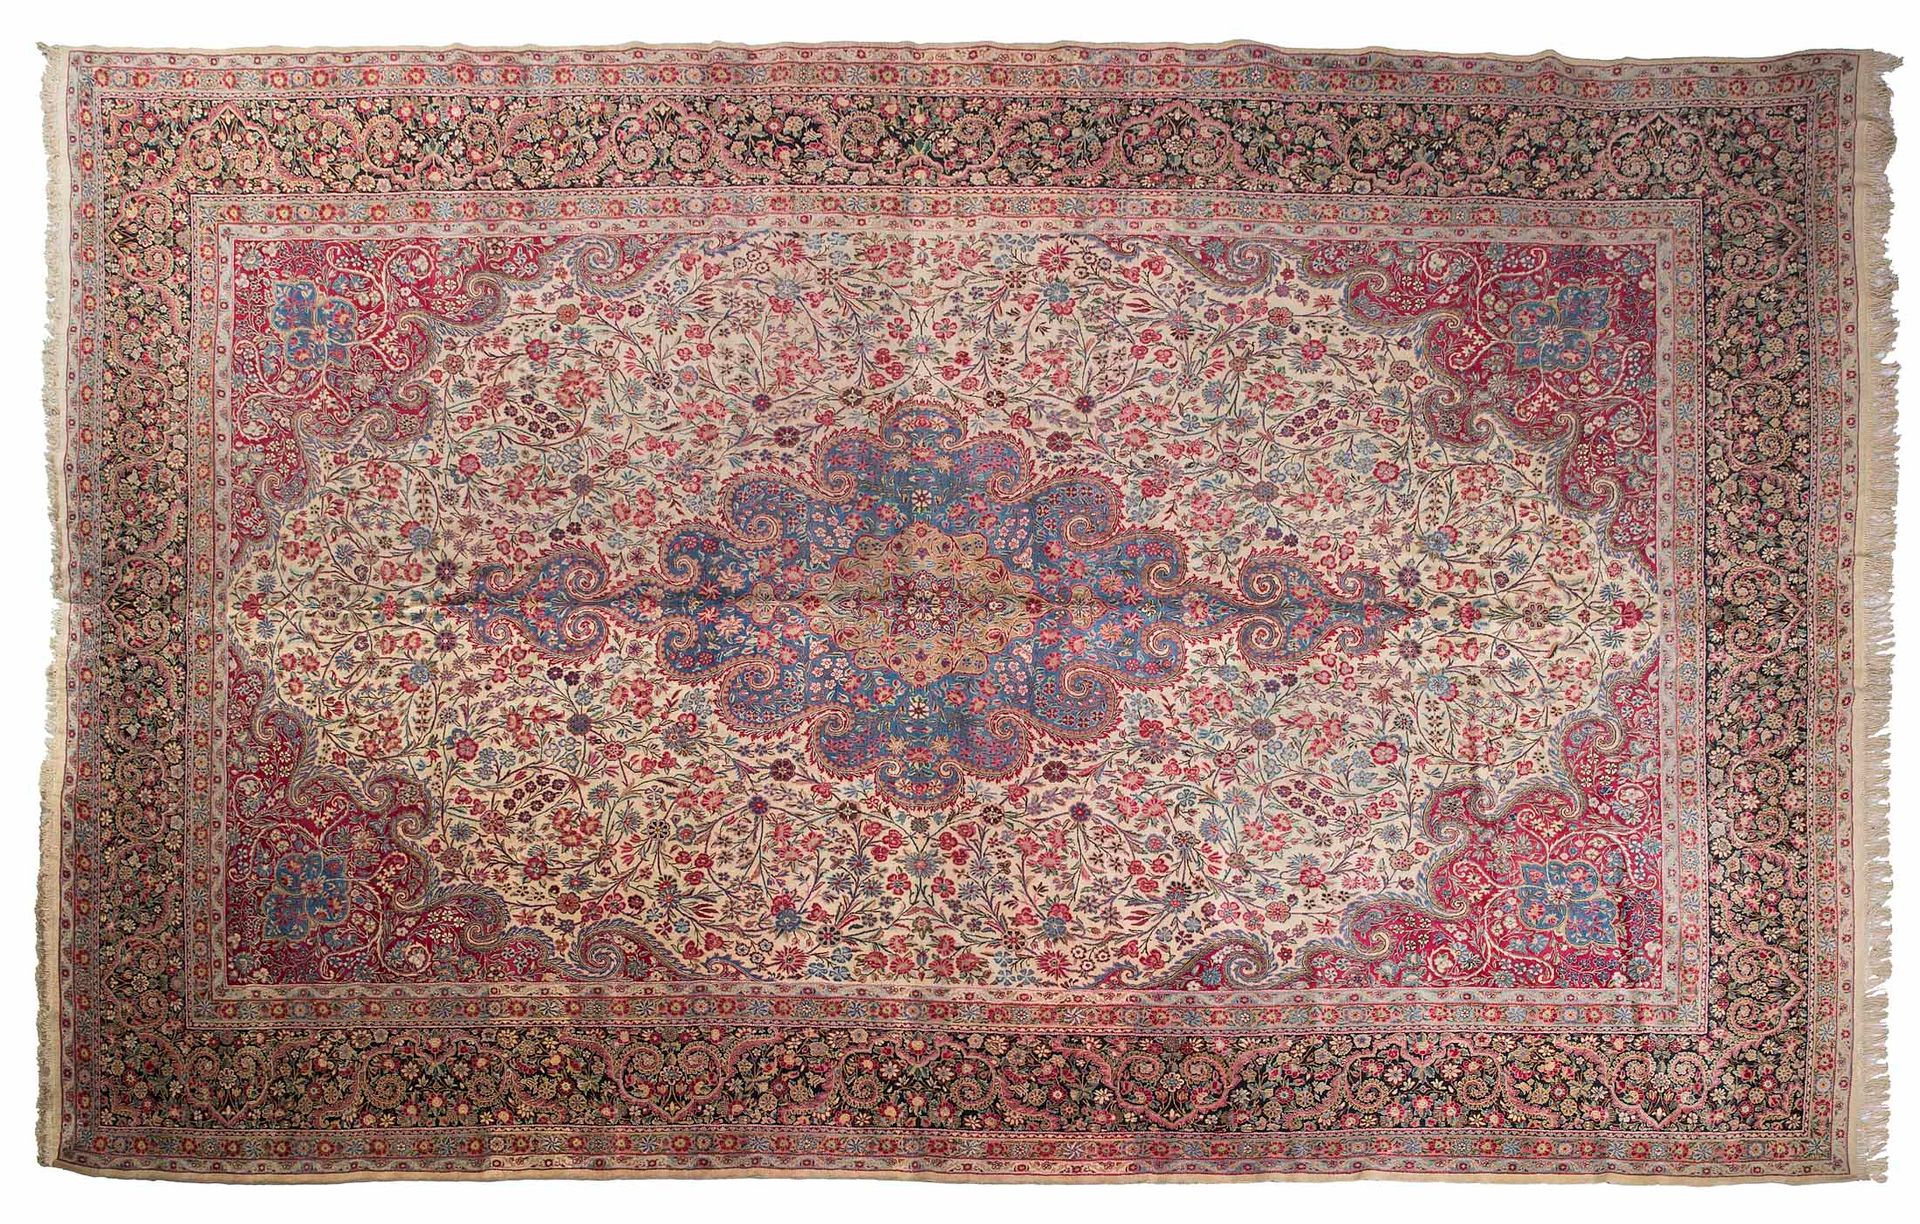 Null Importante alfombra KIRMAN (Persia), principios del siglo XX

Dimensiones :&hellip;